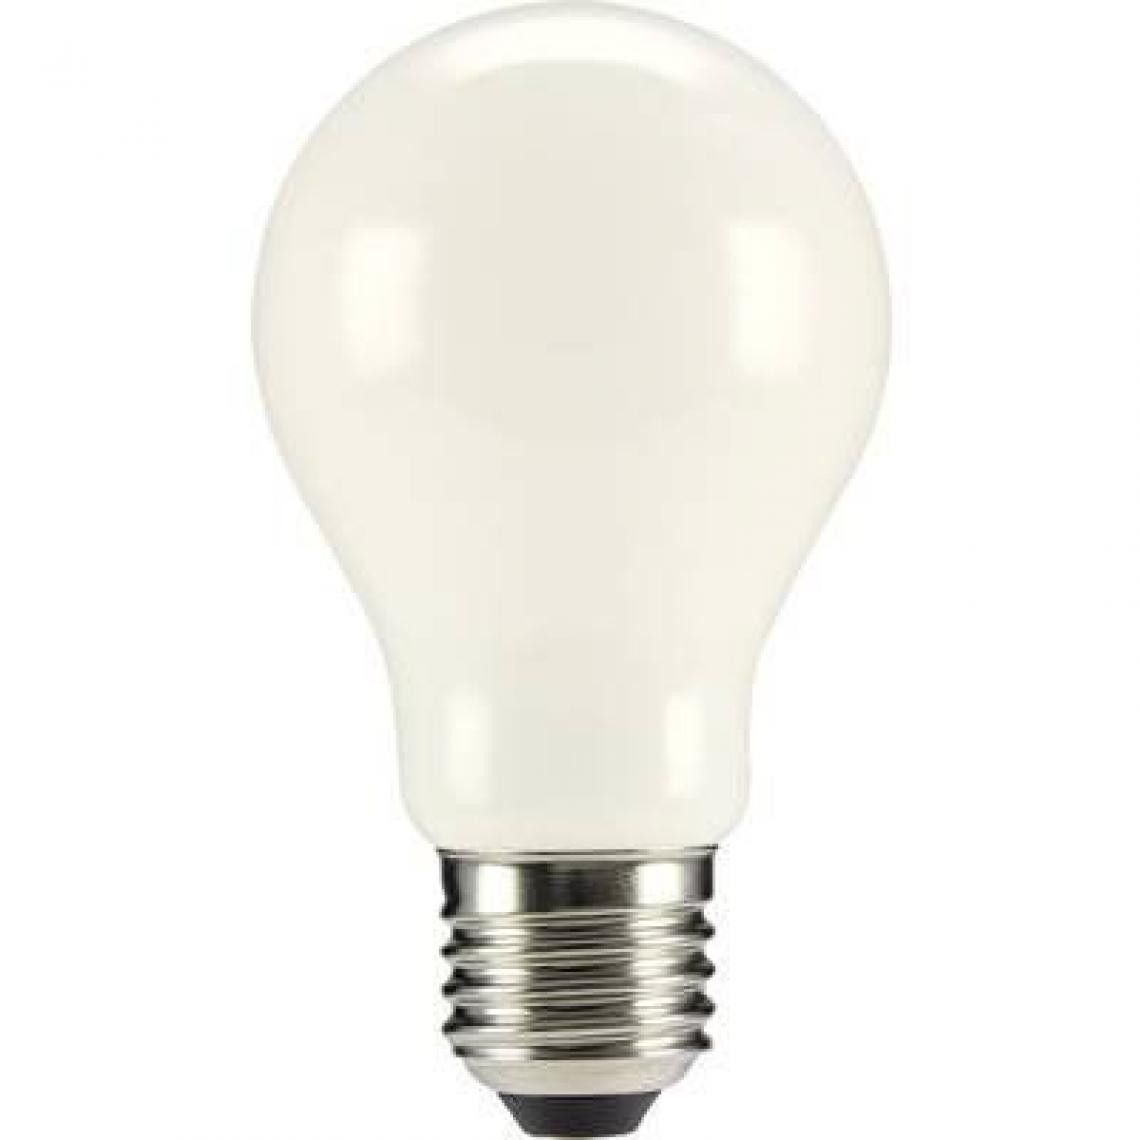 Inconnu - Ampoule LED E27 Sygonix STA6013softwhite forme standard 6 W = 55 W blanc chaud (Ø x L) 60 mm x 105 mm EEC: classe A++ à - Ampoules LED